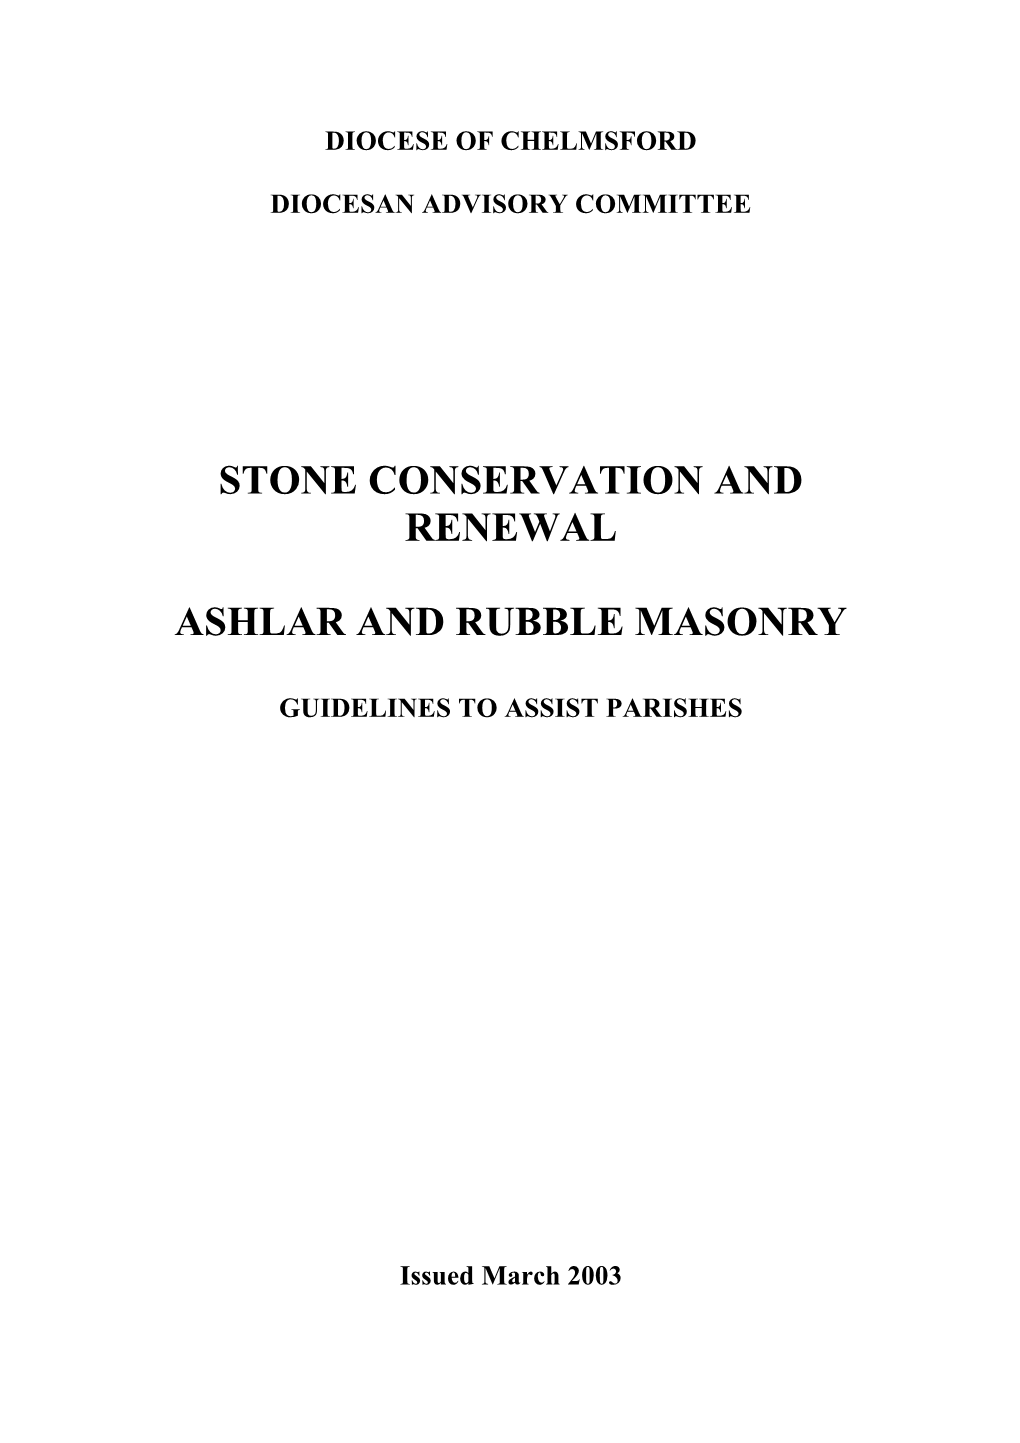 Ashlar and Rubble Masonry